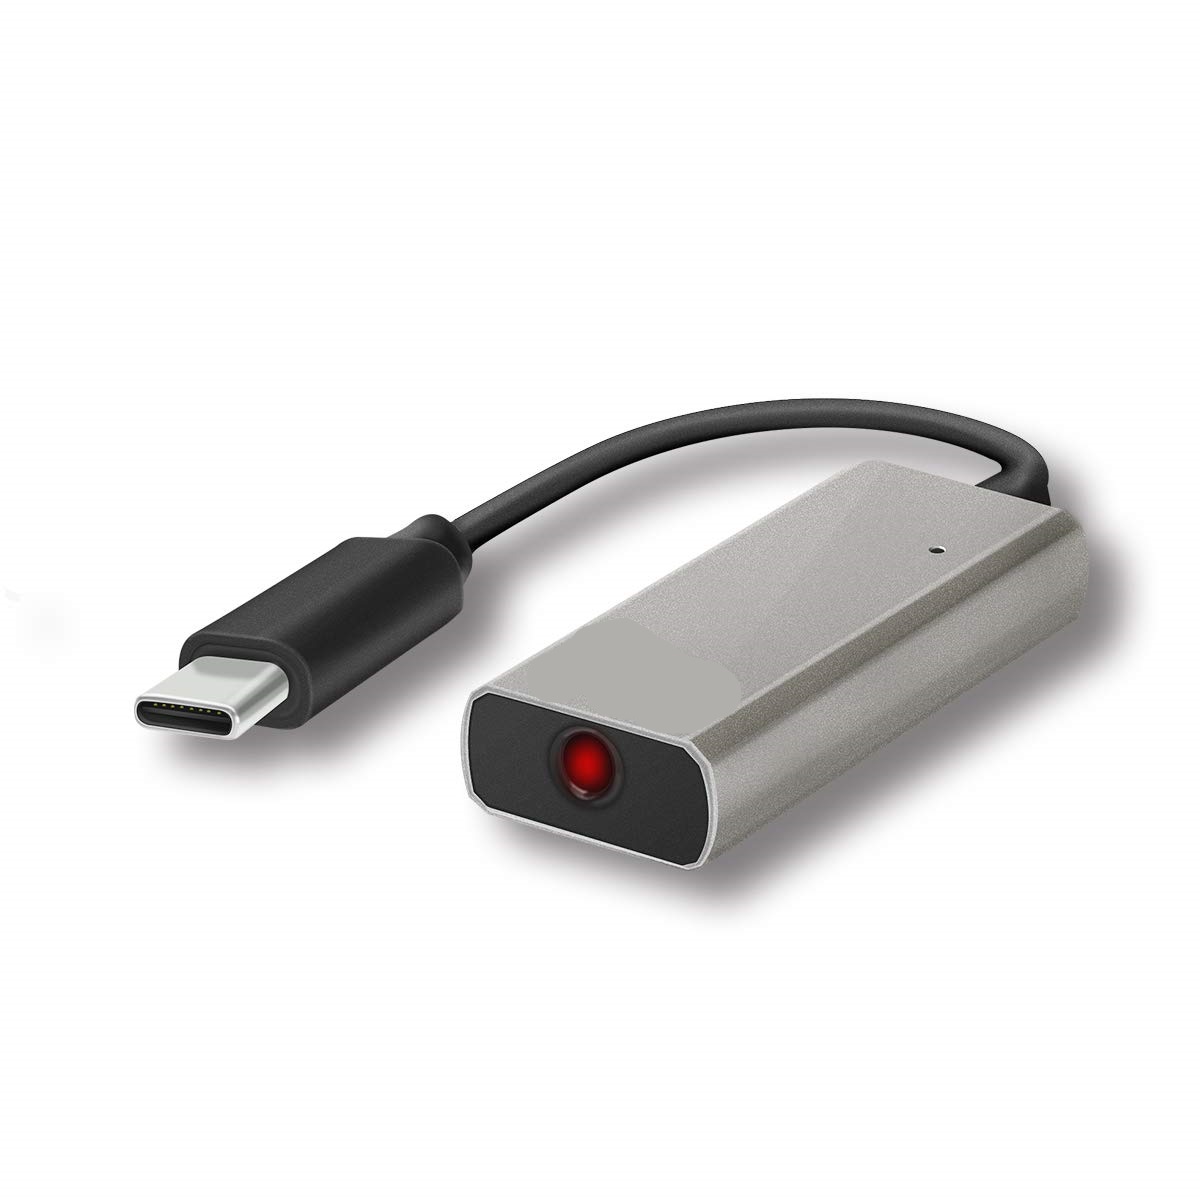 Audio USB Converters Market Unveiling the Sonic Revolution